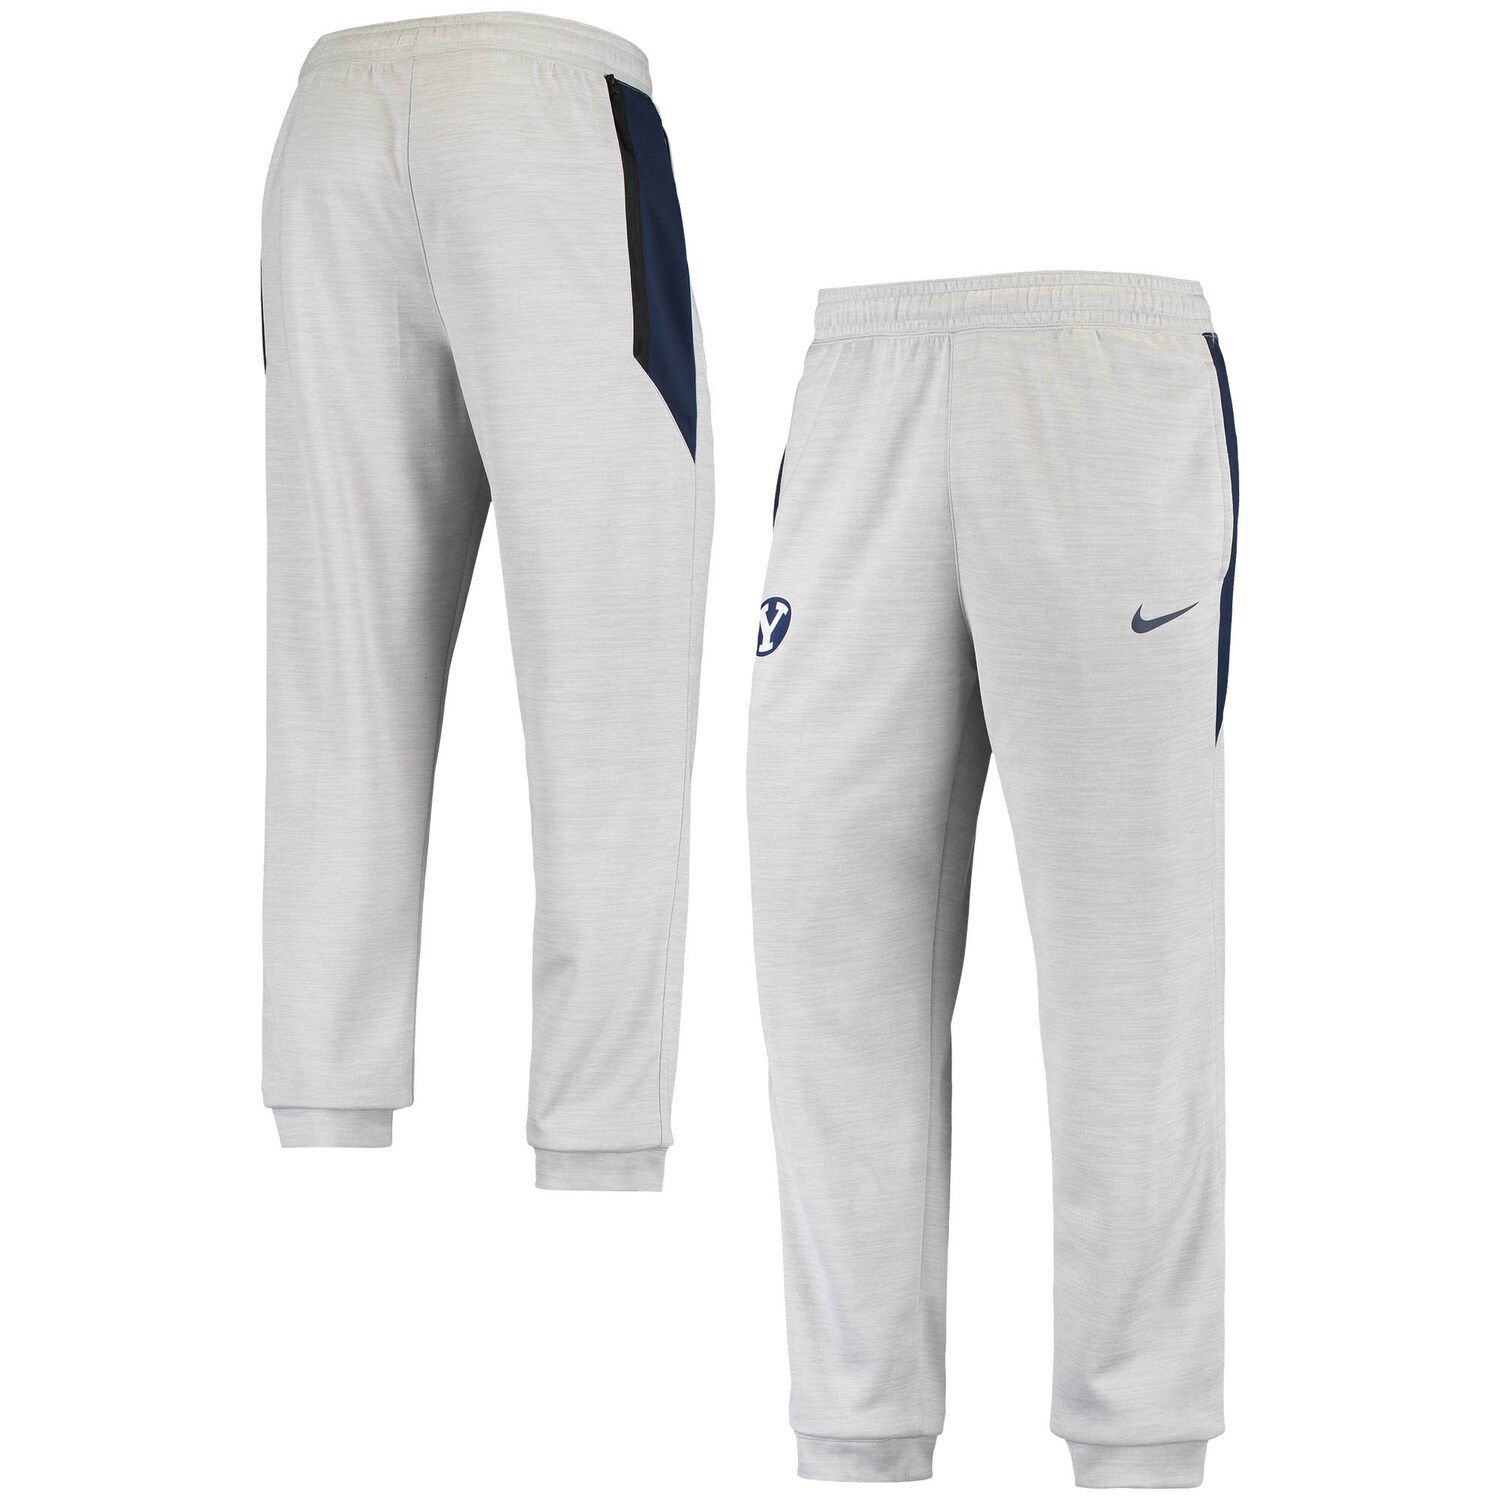 Mens Nike Pants: Large Selection of 